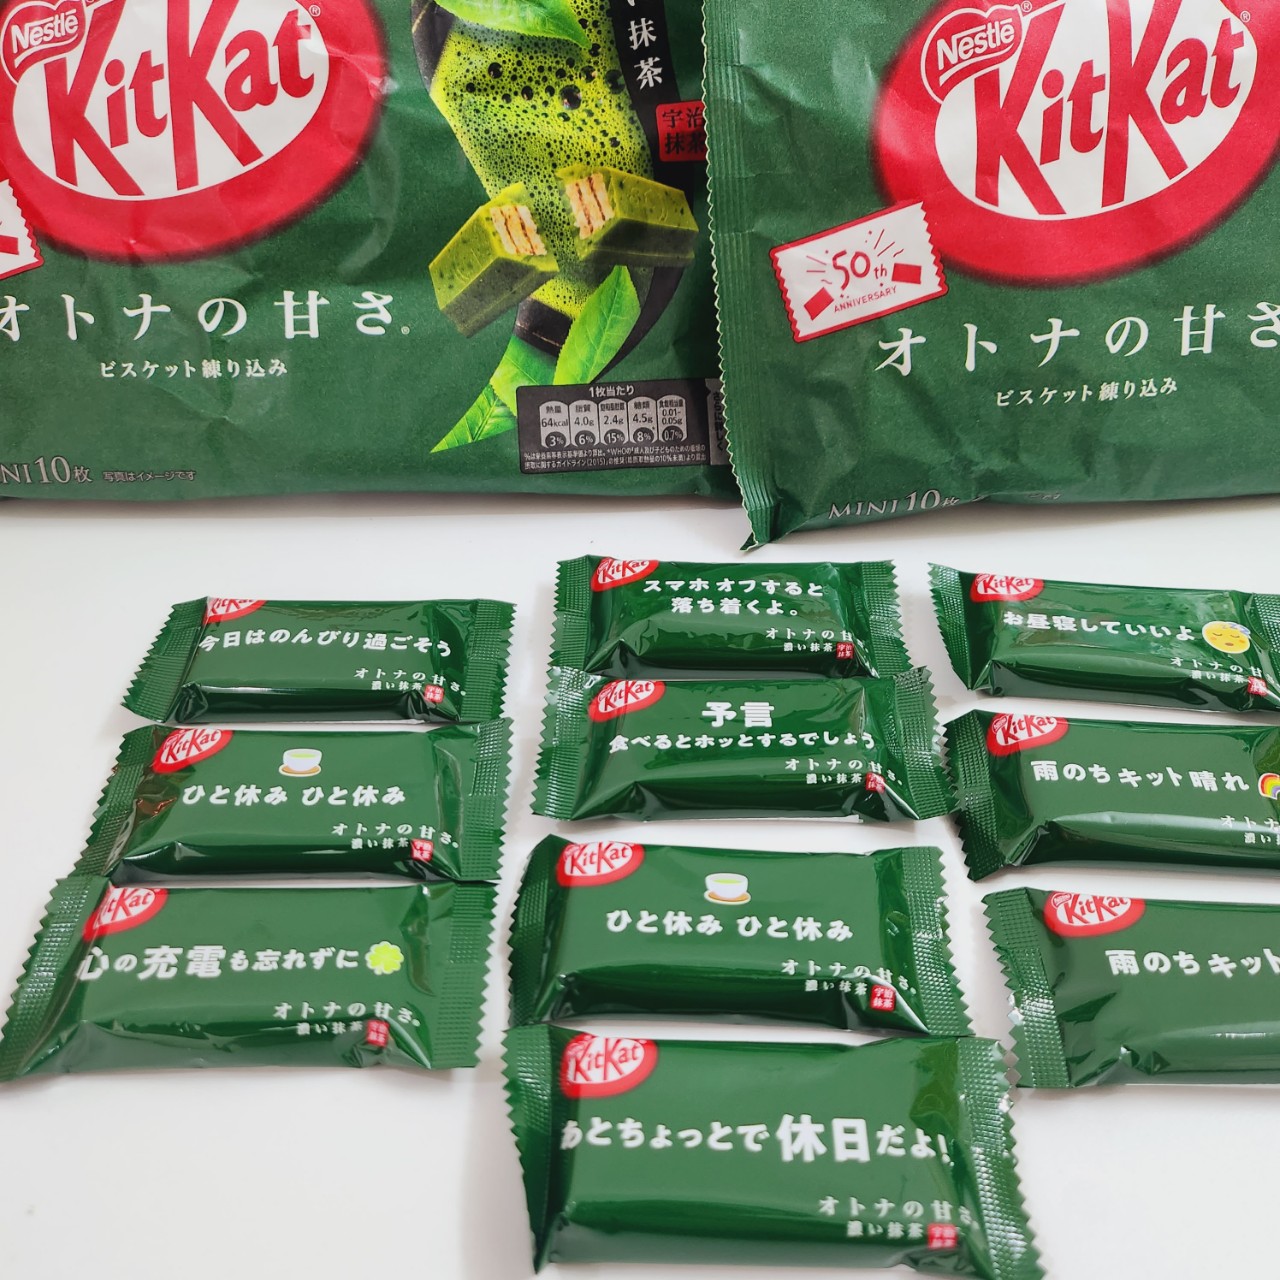 KITKAT Nhật nhập khẩu - gói 10 thanh